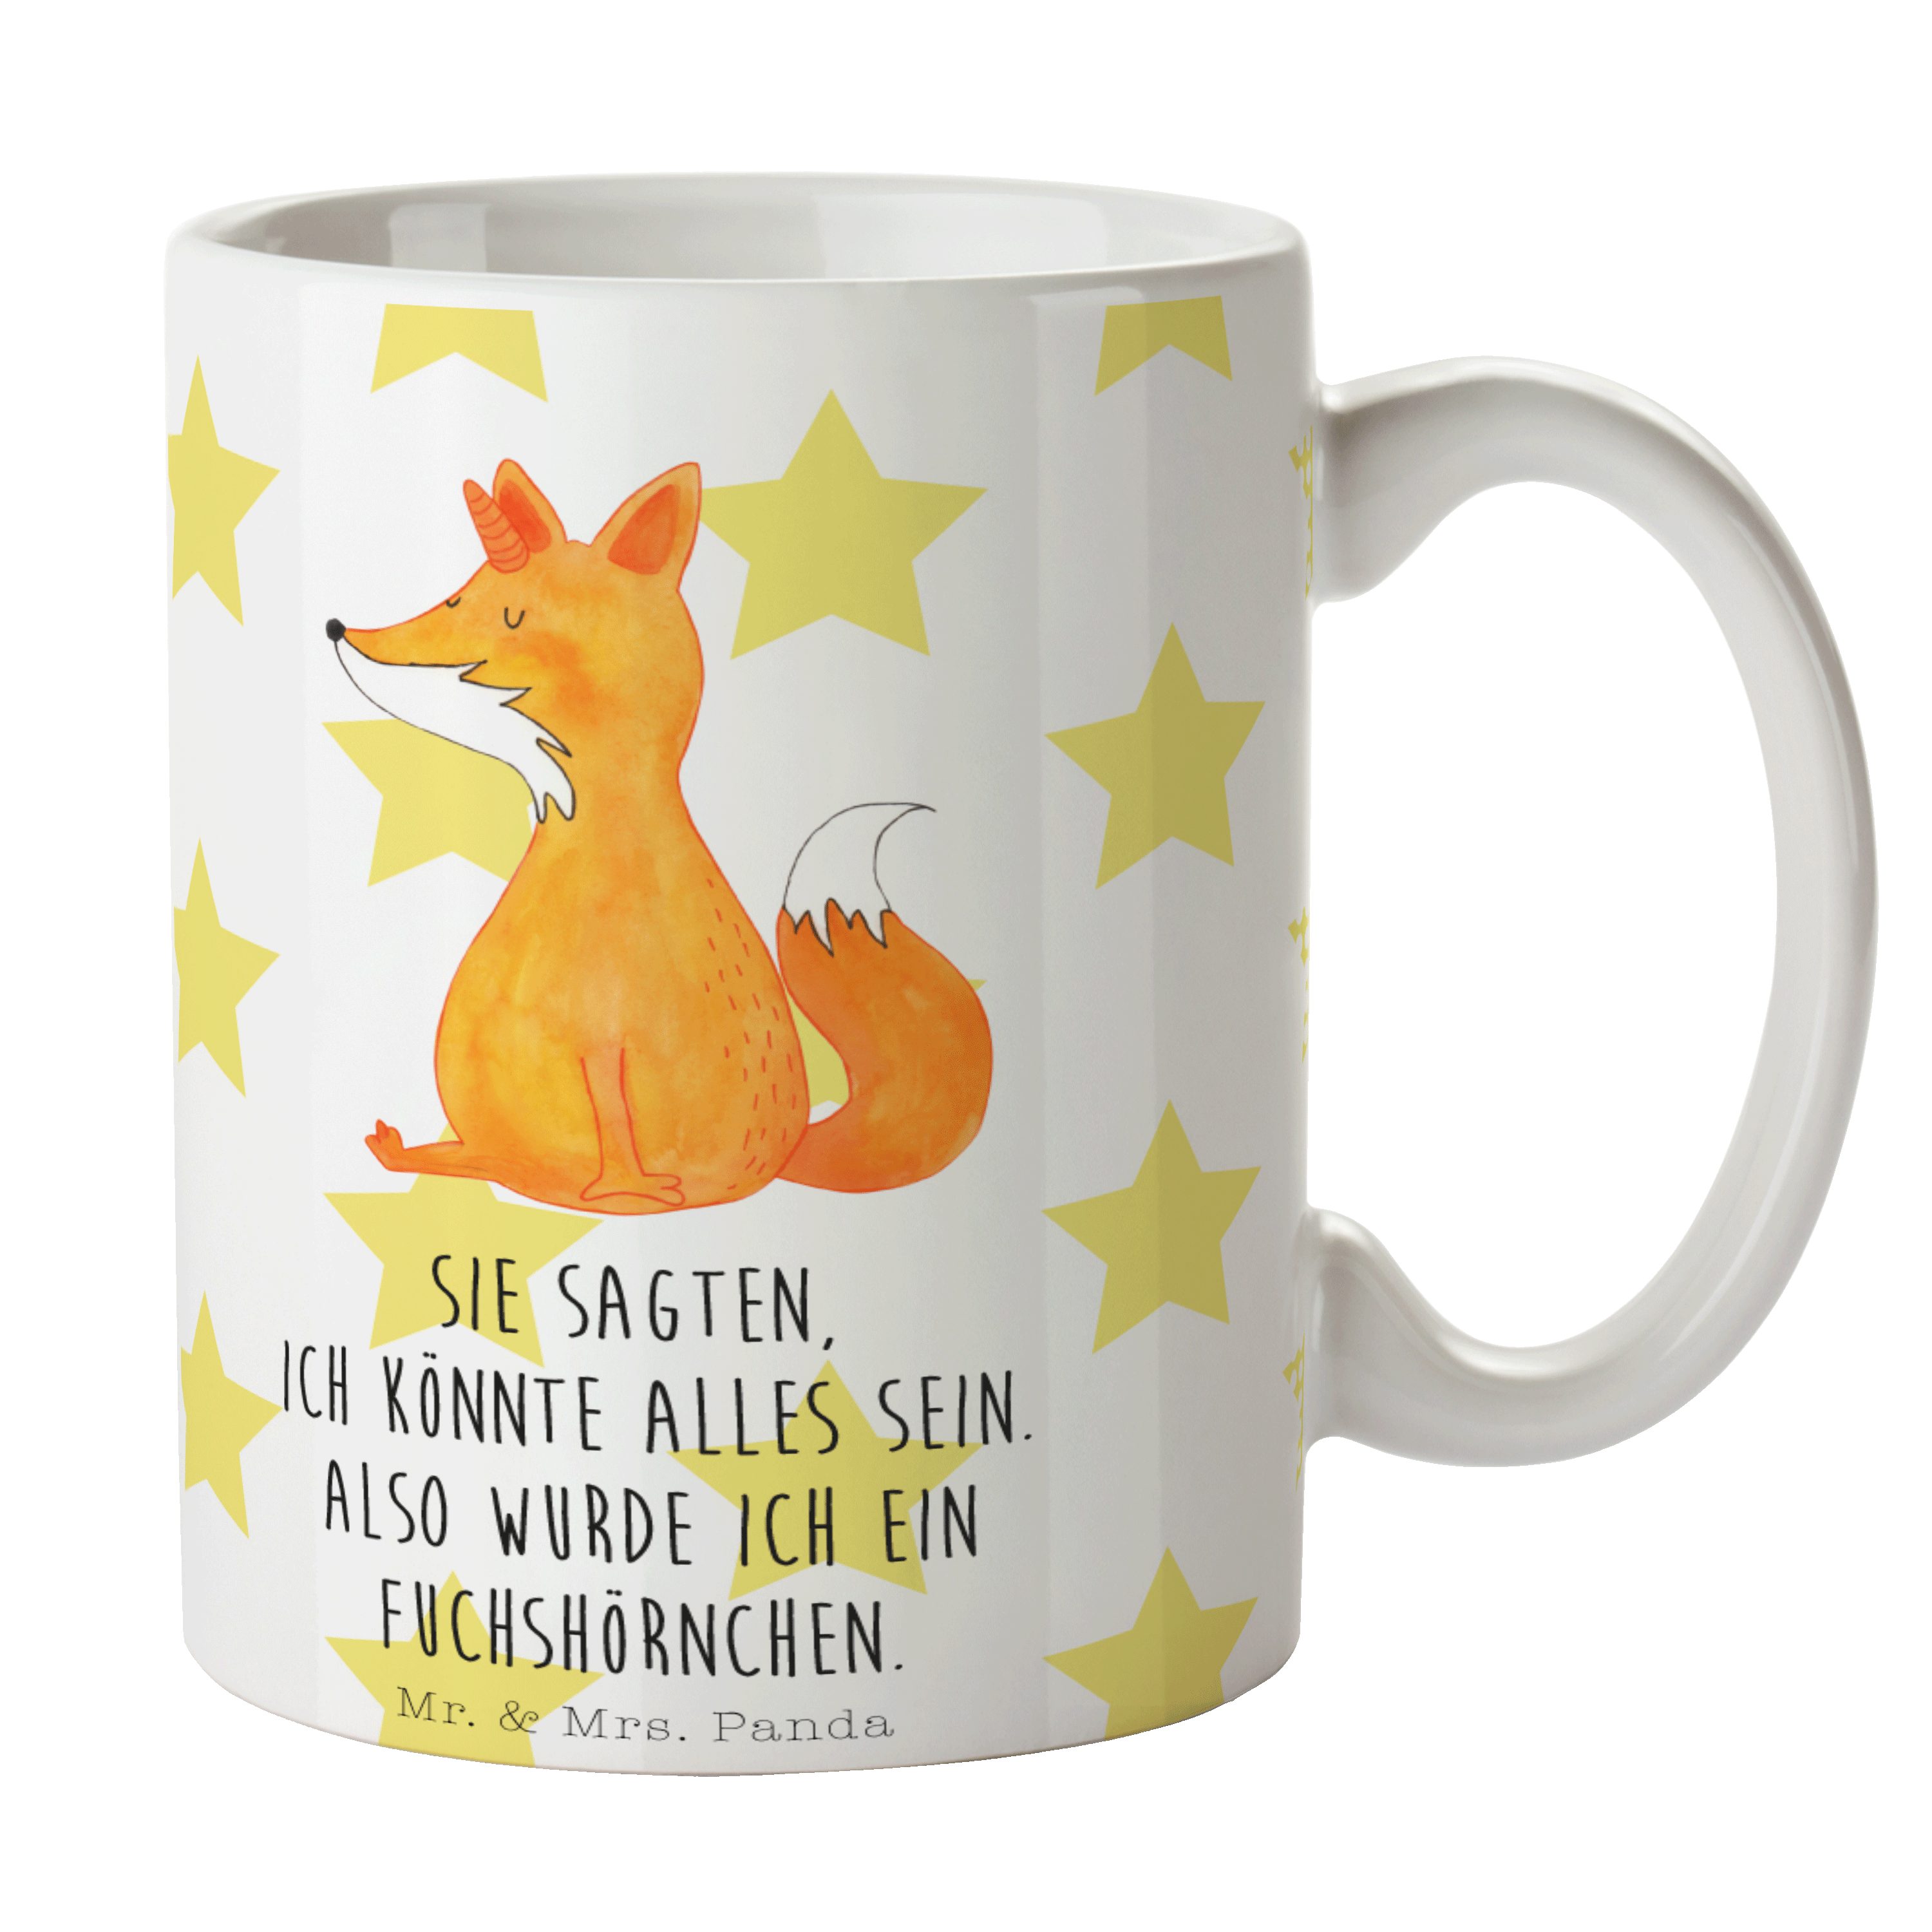 Mr. & Mrs. Panda Tasse Fuchshörnchen Wunsch - Weiß - Geschenk, Einhörner, Teetasse, Kaffeebe, Keramik